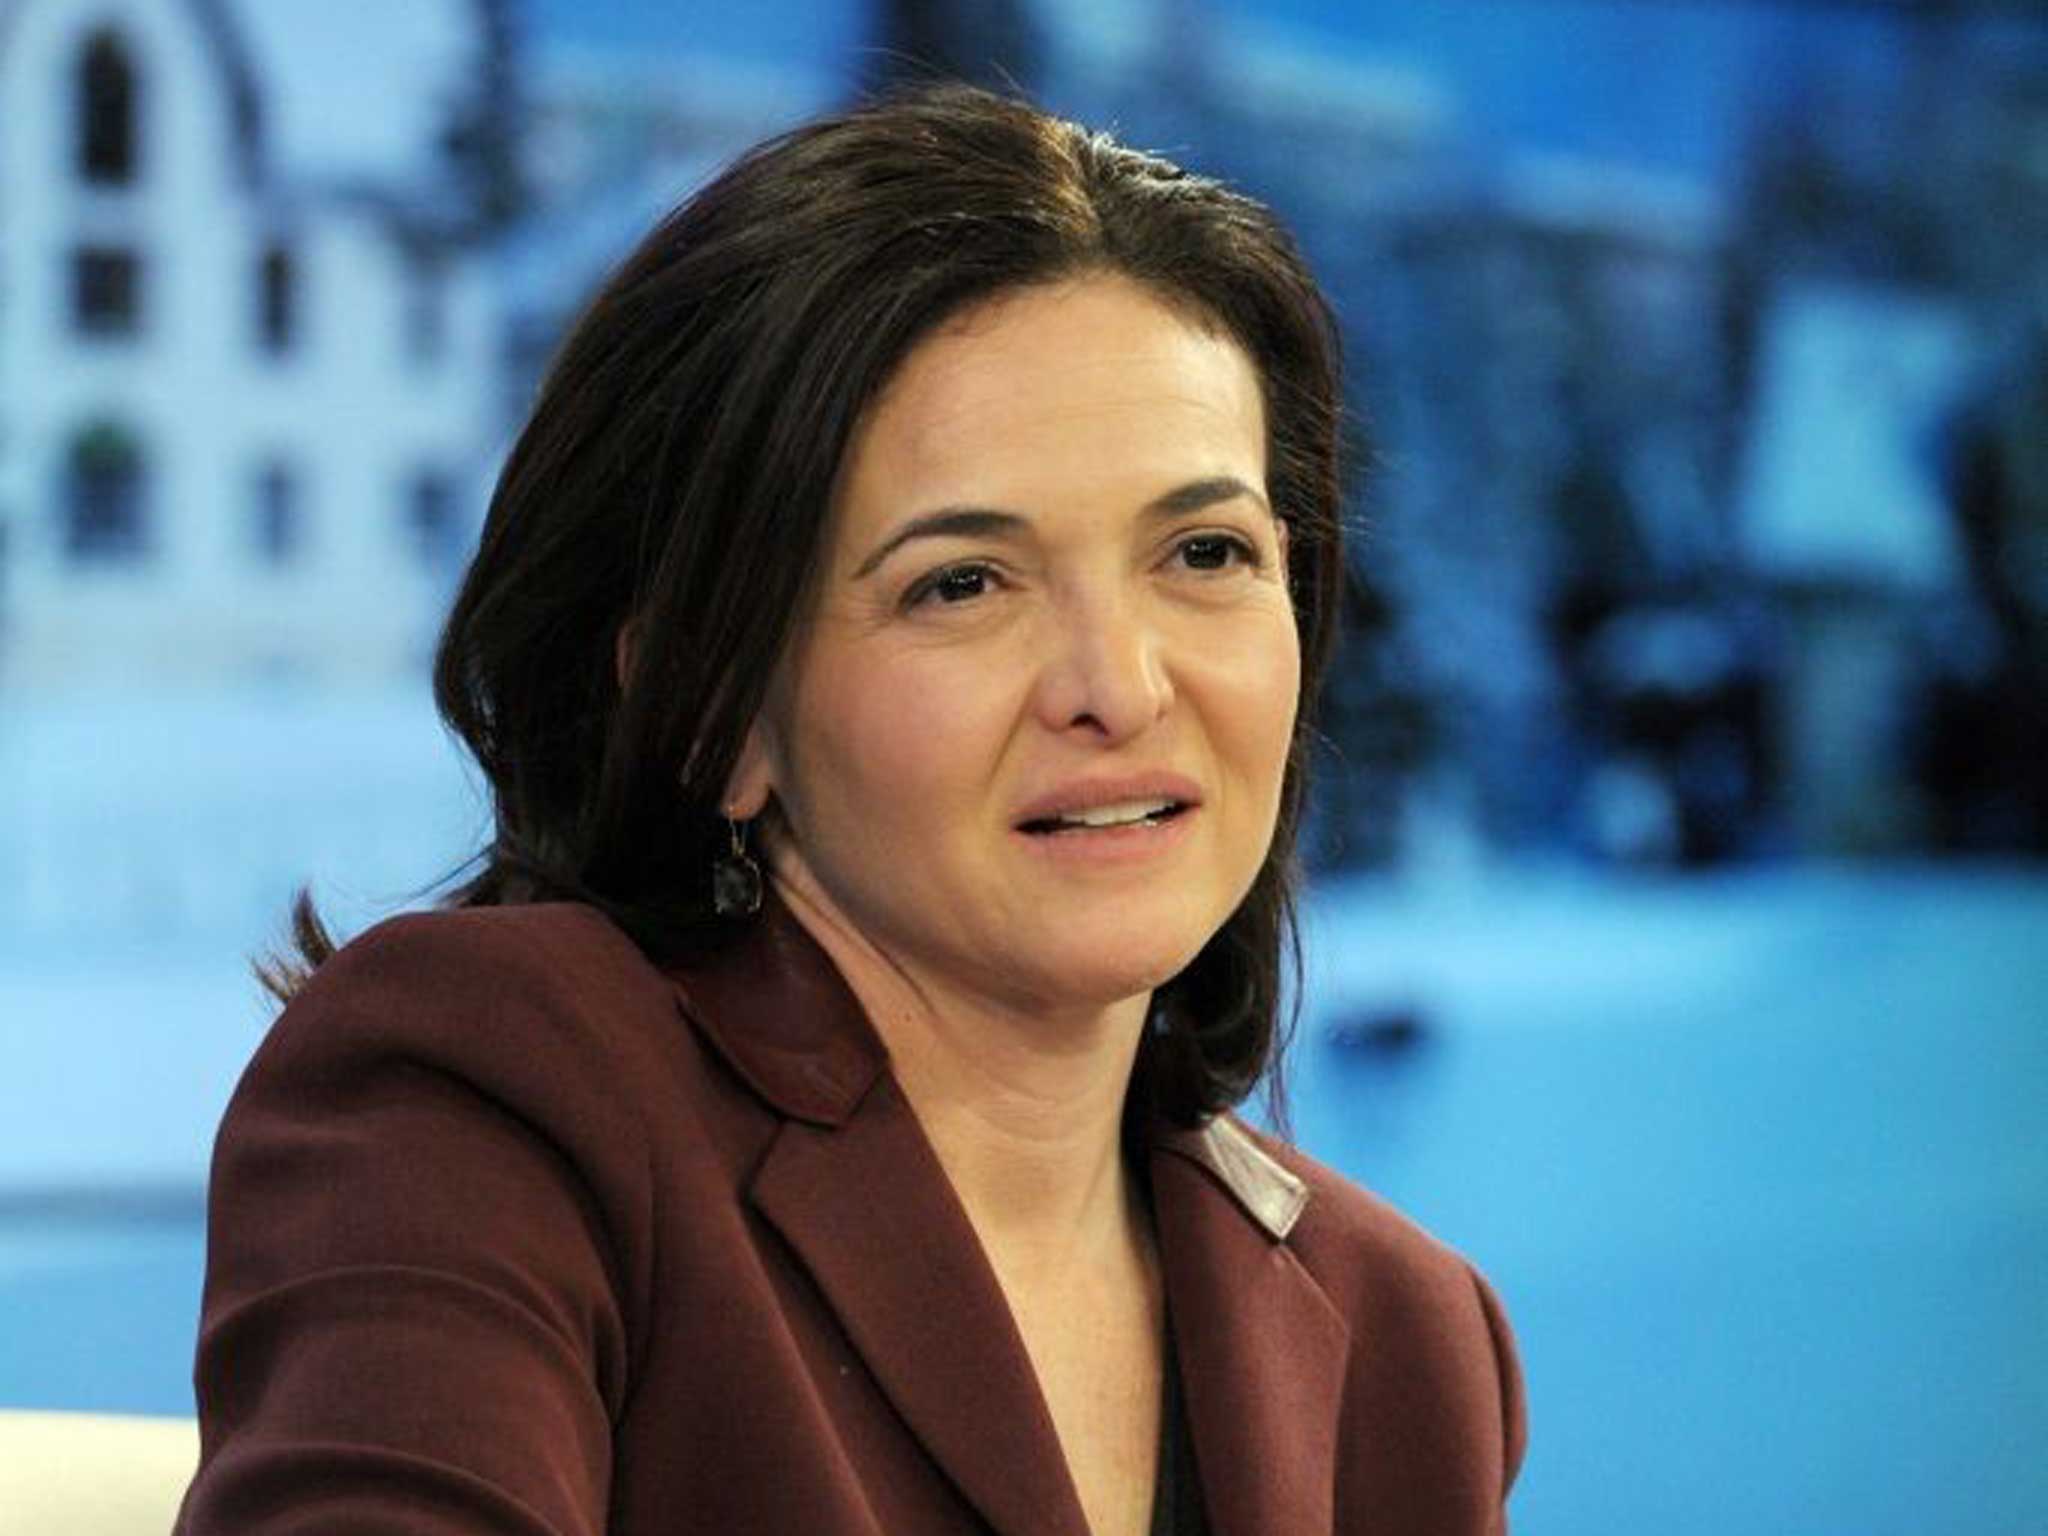 Sandberg is Facebook's chief operating officer